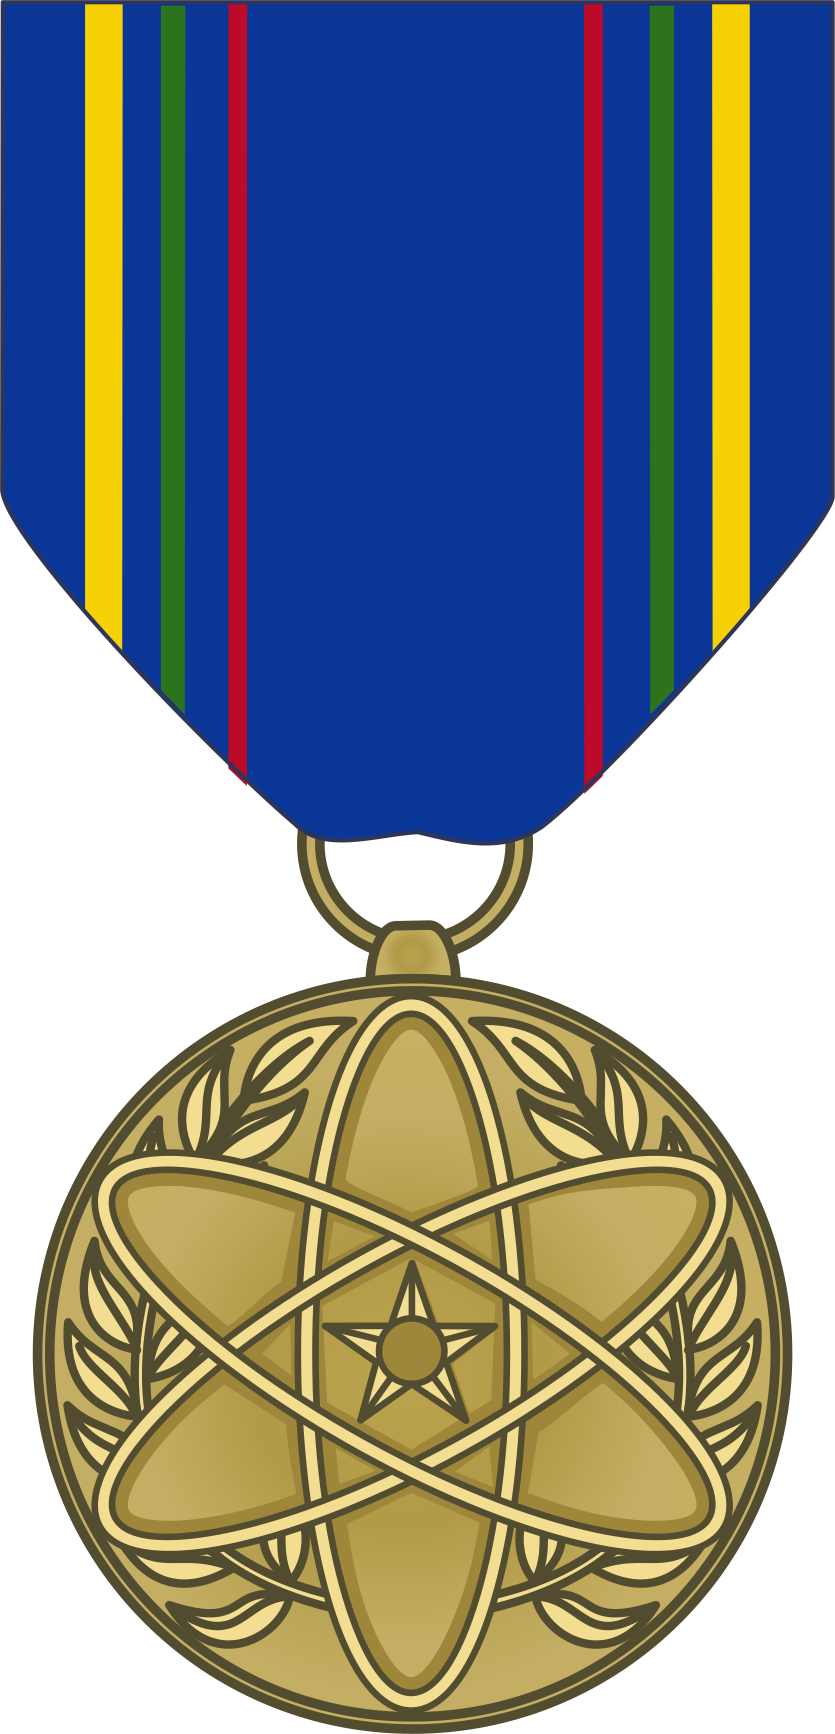 Download Full Image - Atomic Veterans Service Medal (835x1734)